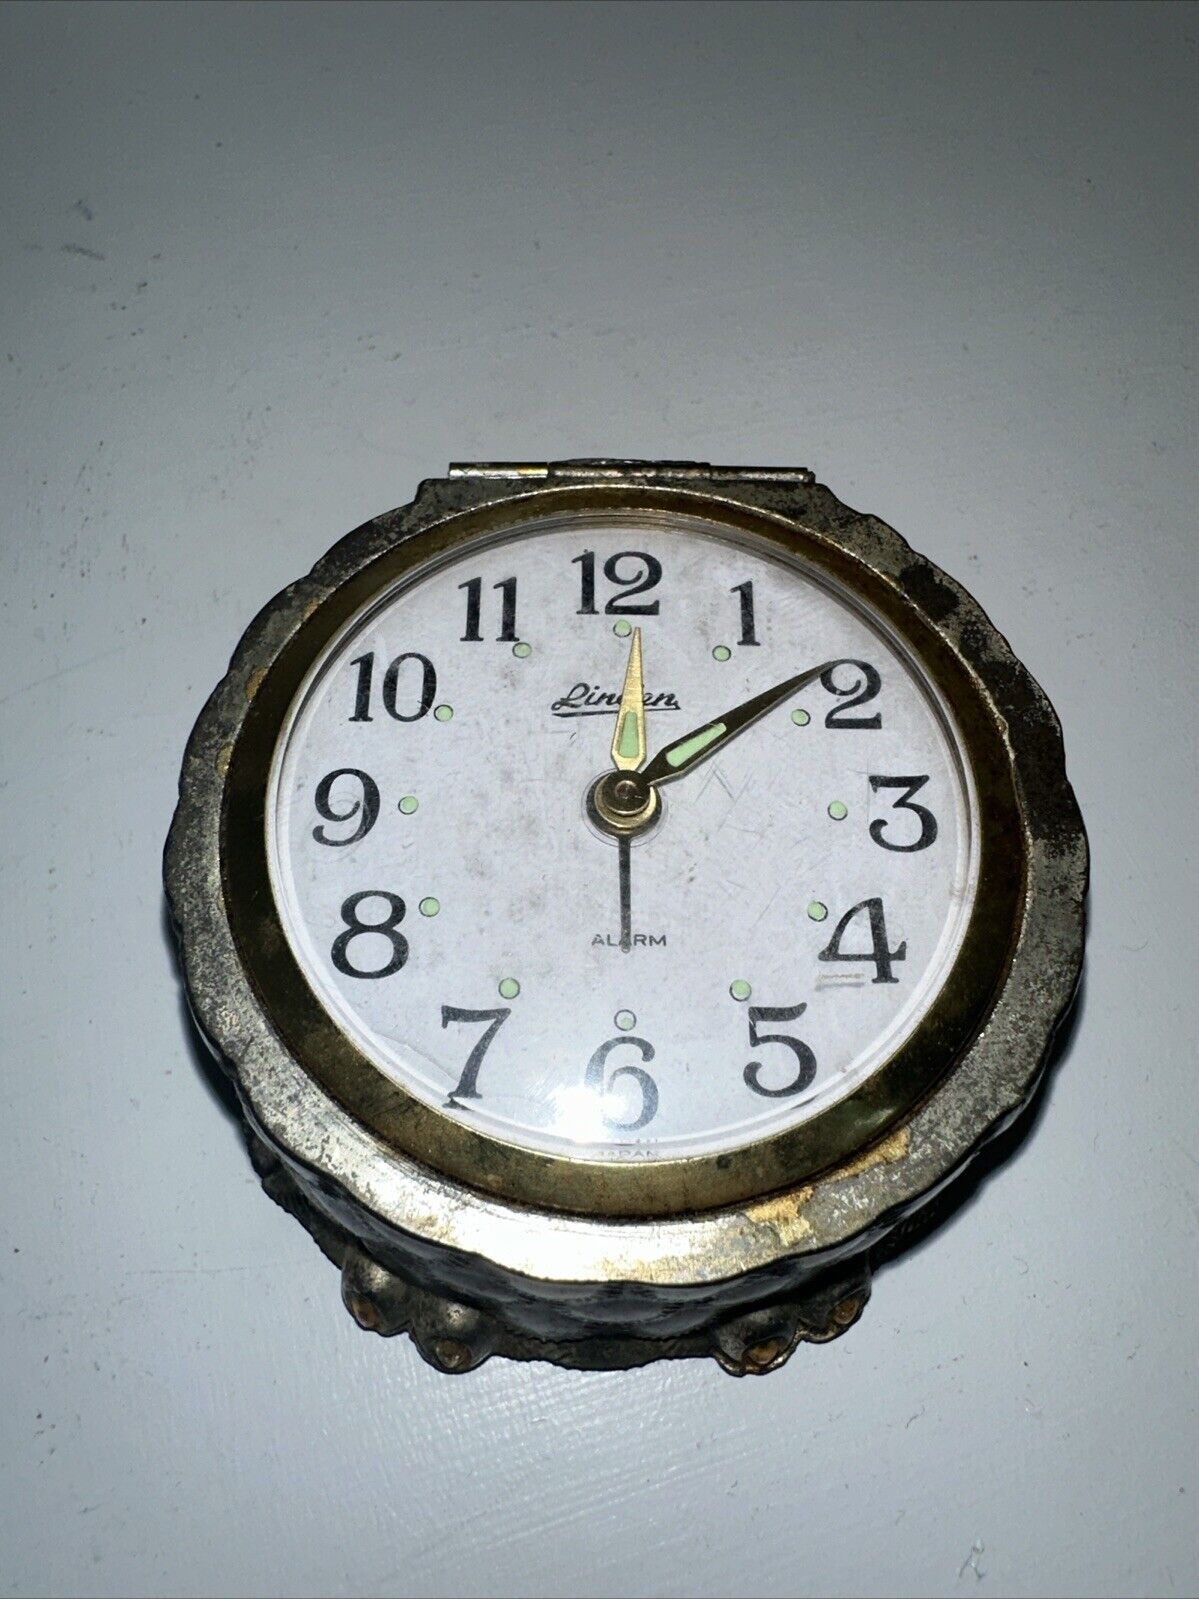 Linden Travel Alarm Clock Vintage Winds Up Gold And Silver.